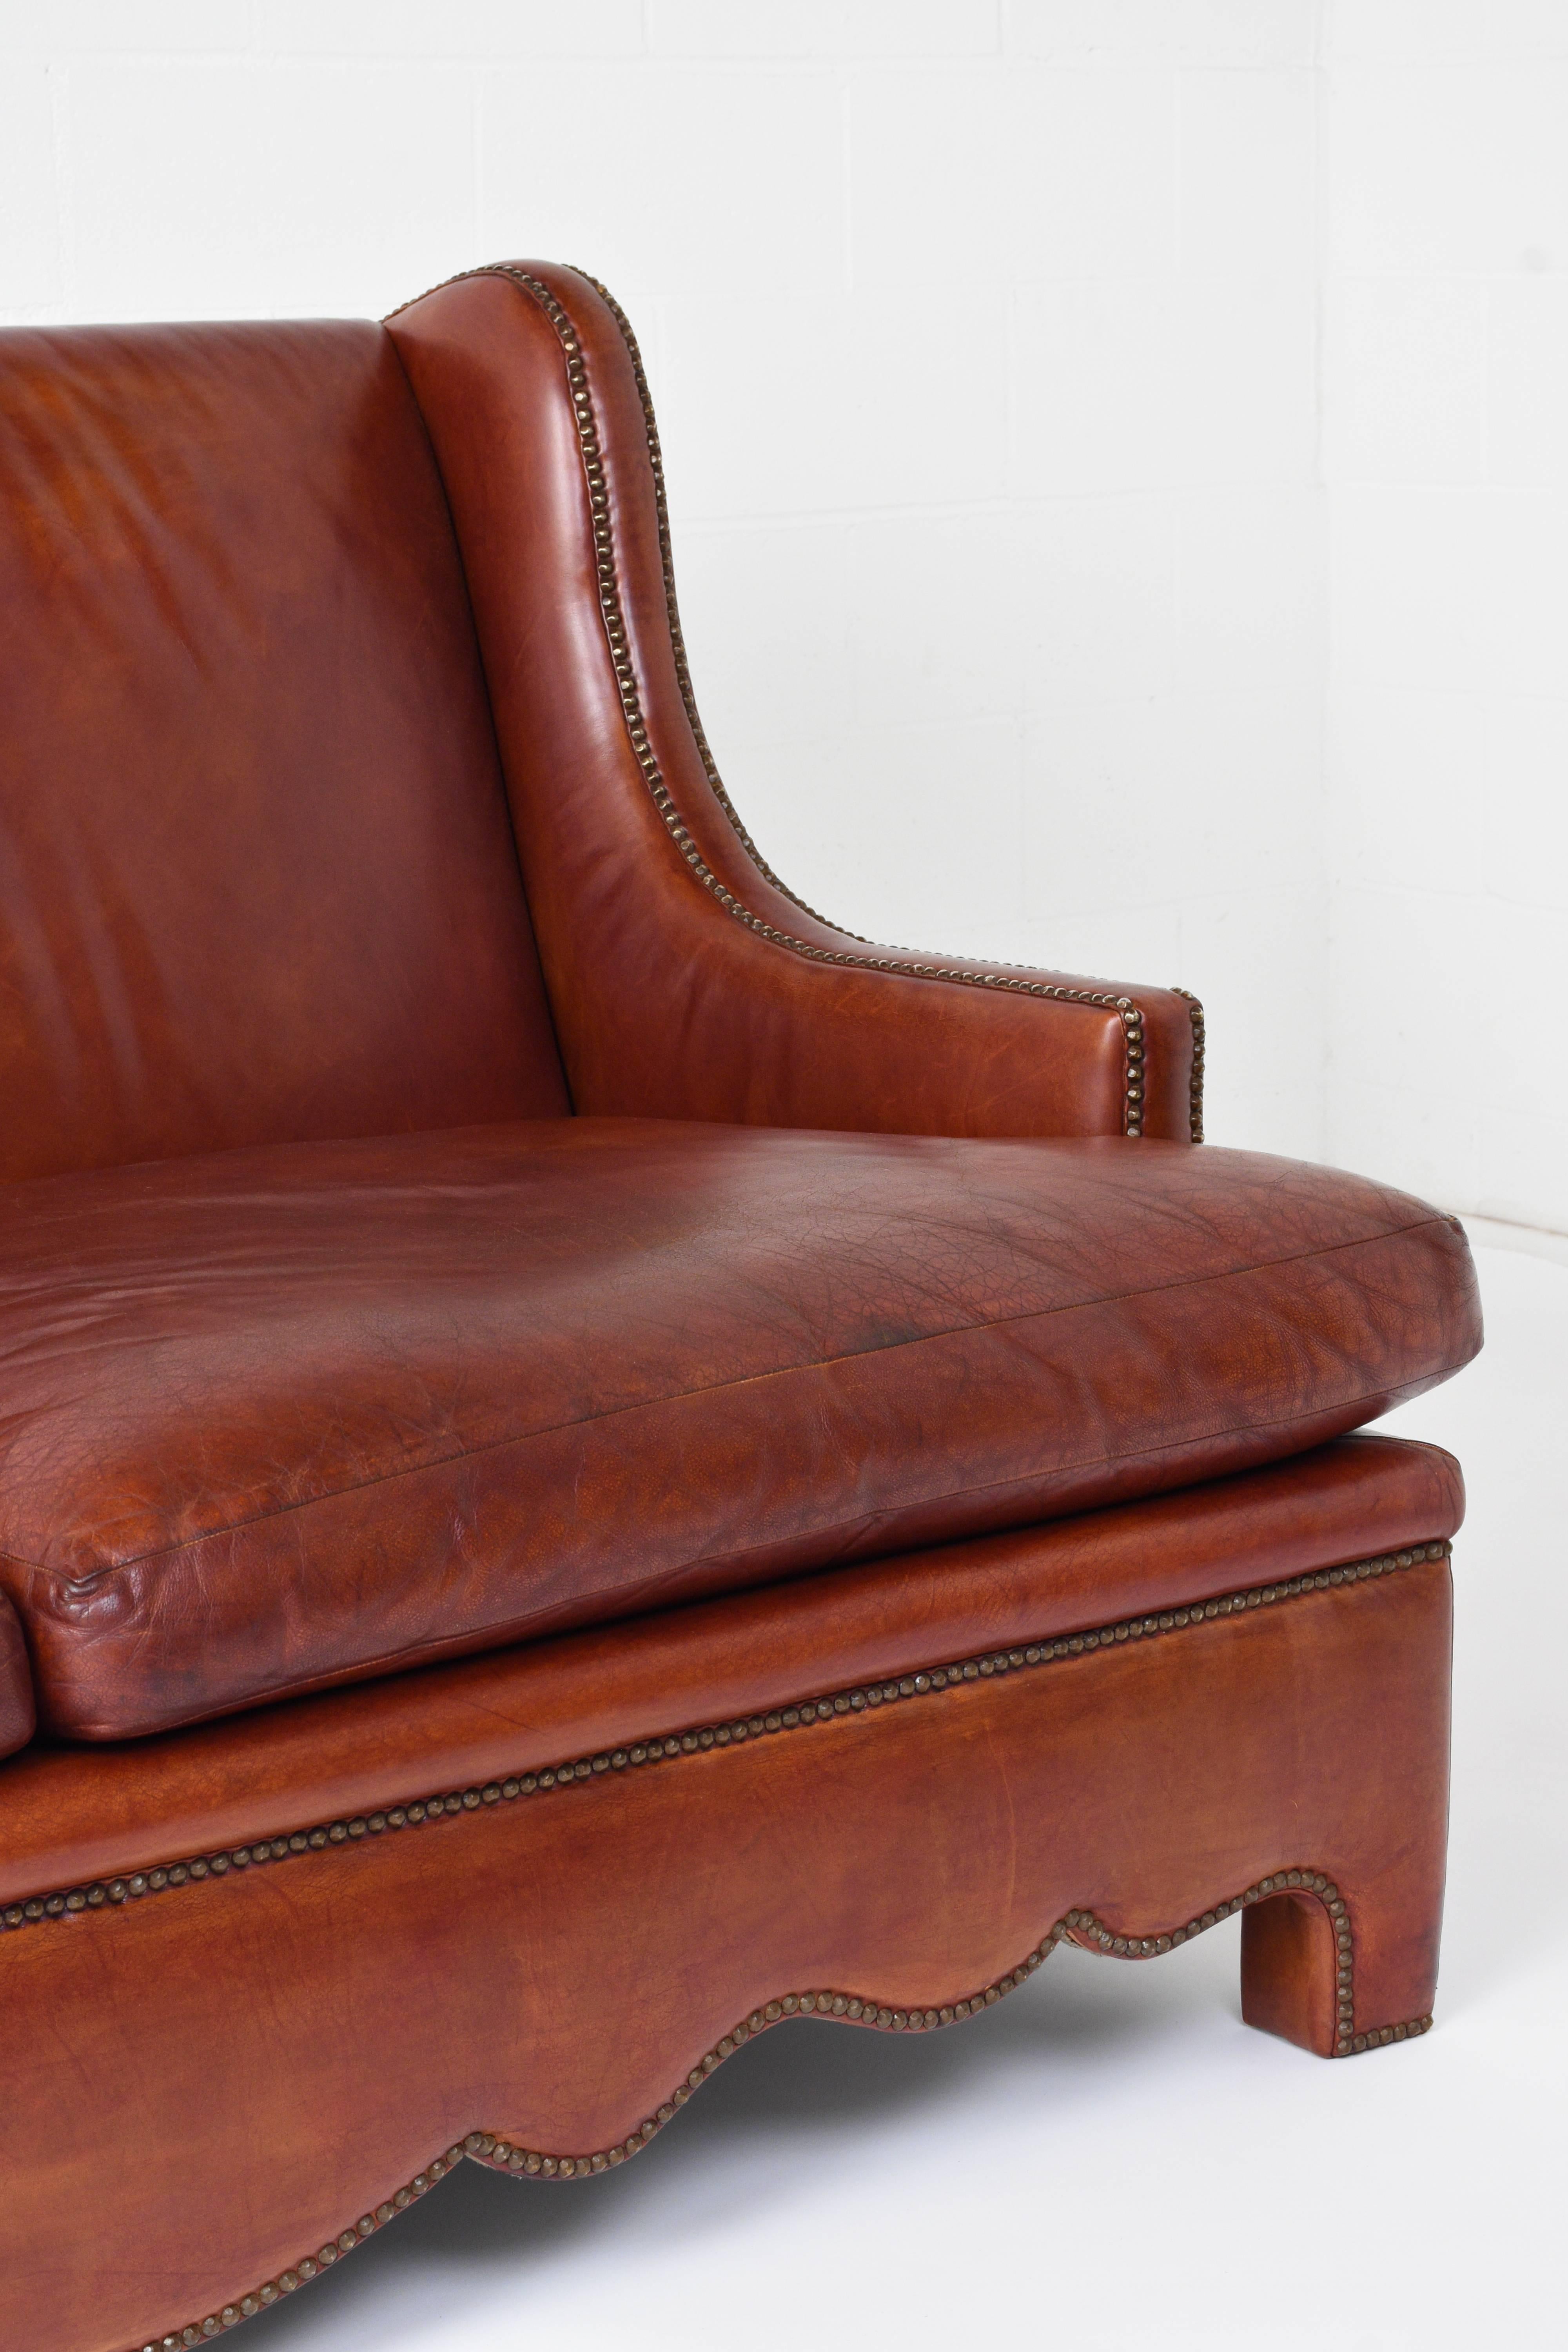 vintage leather sofa for sale